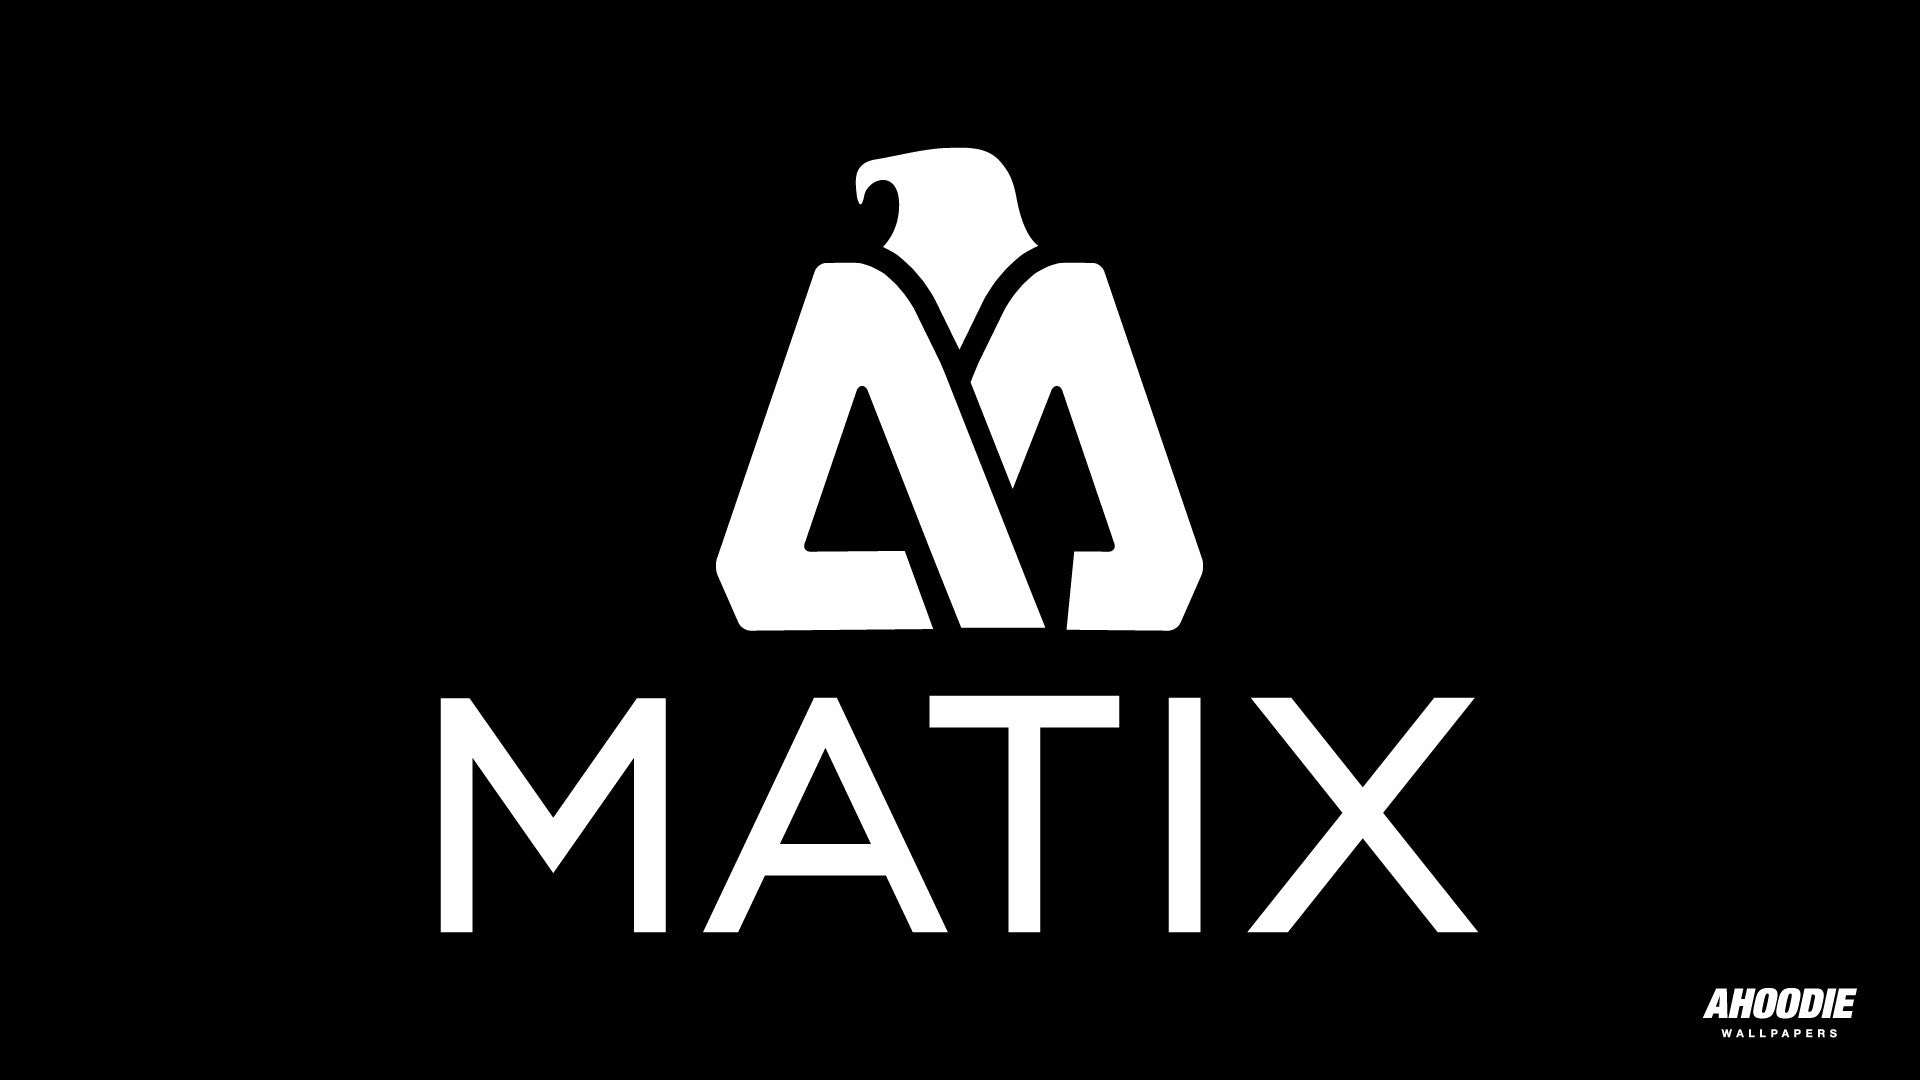 Matix party (2013)